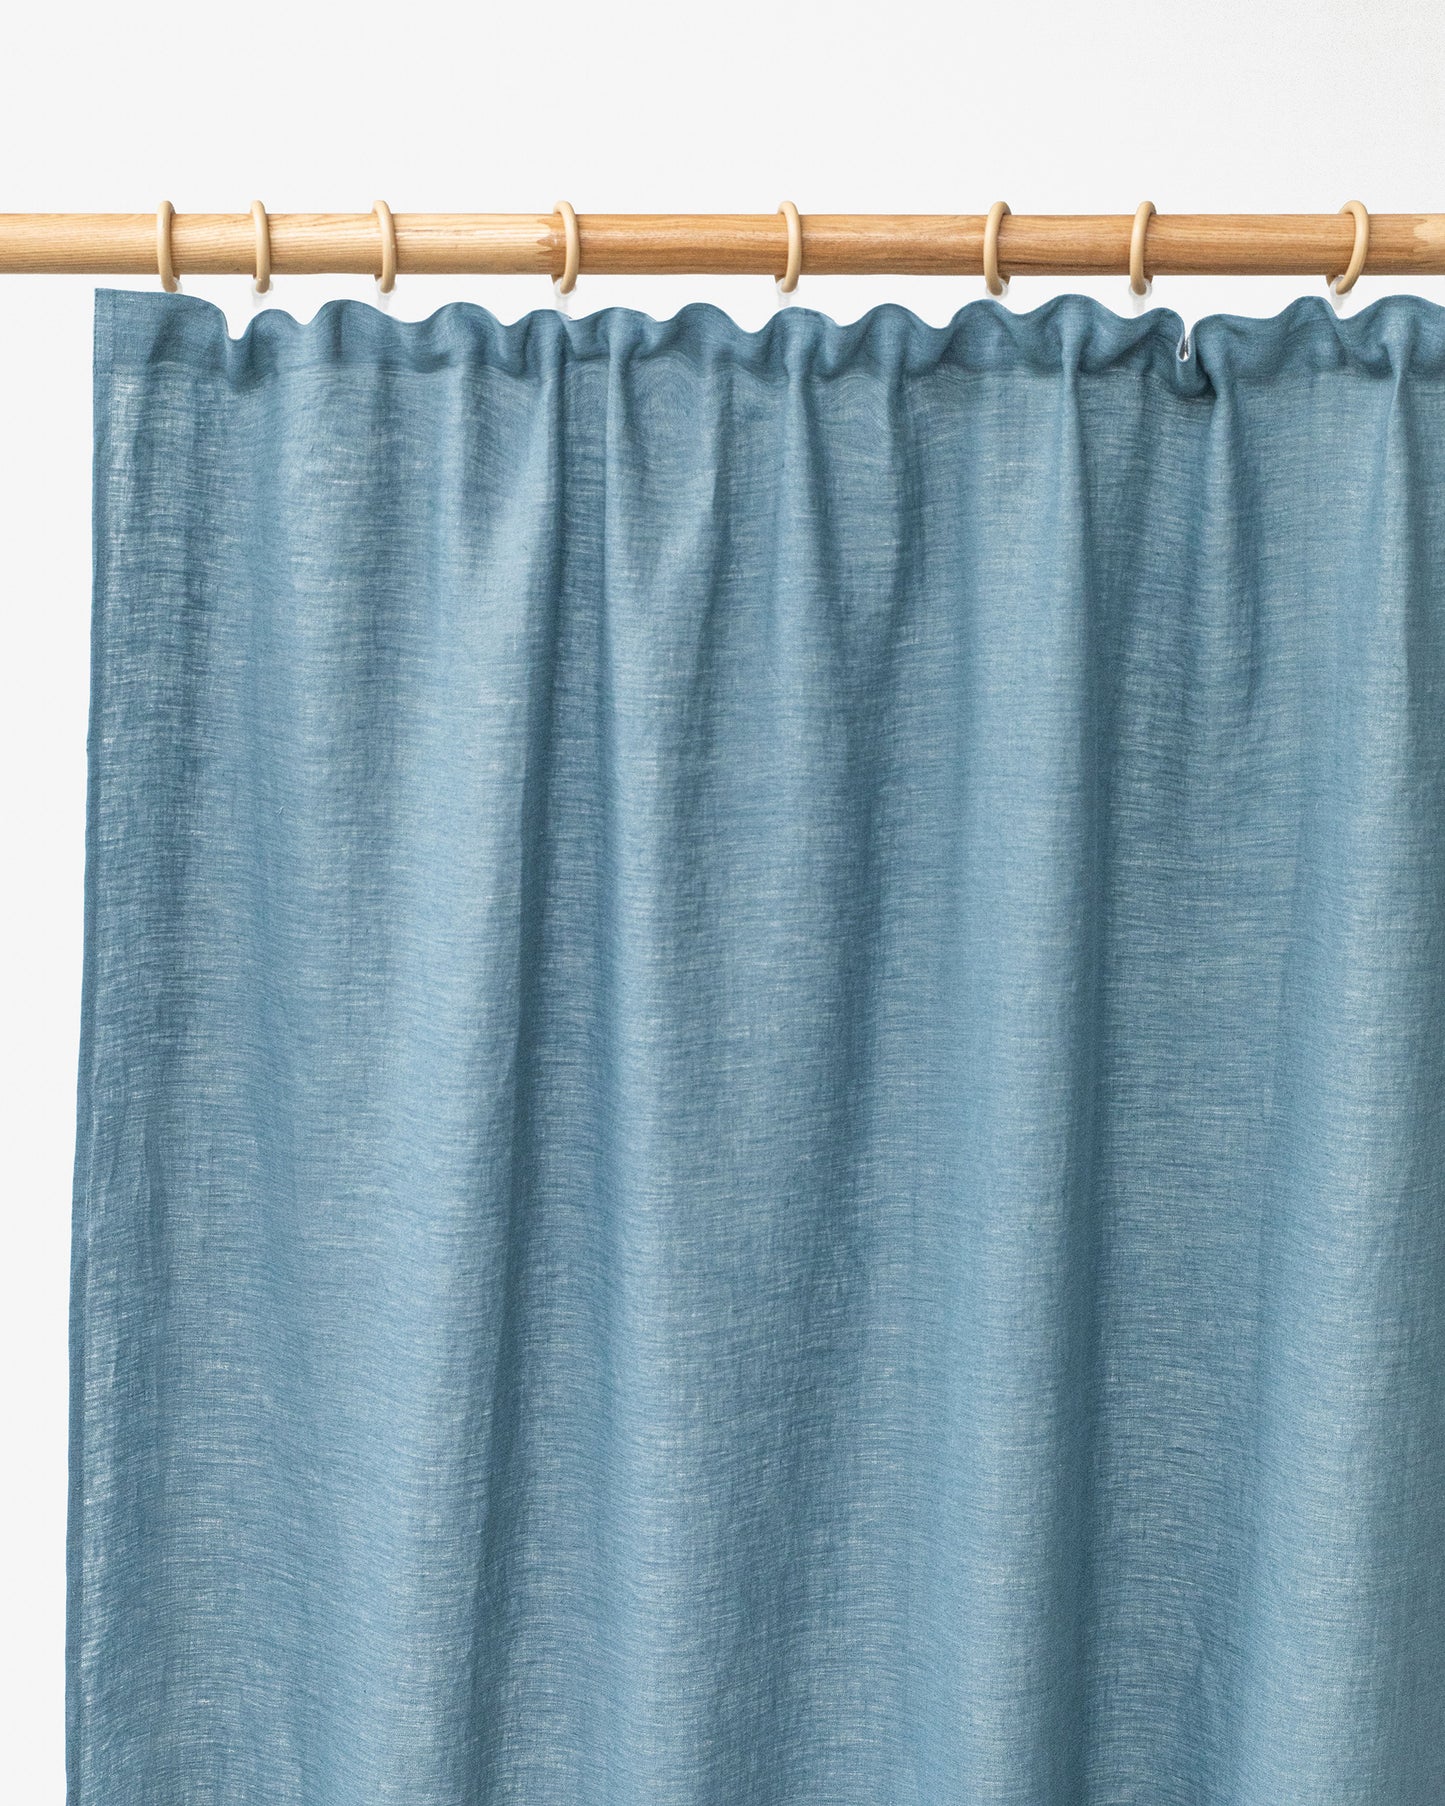 Pencil pleat linen curtain panel (1 pcs) in Gray blue - MagicLinen